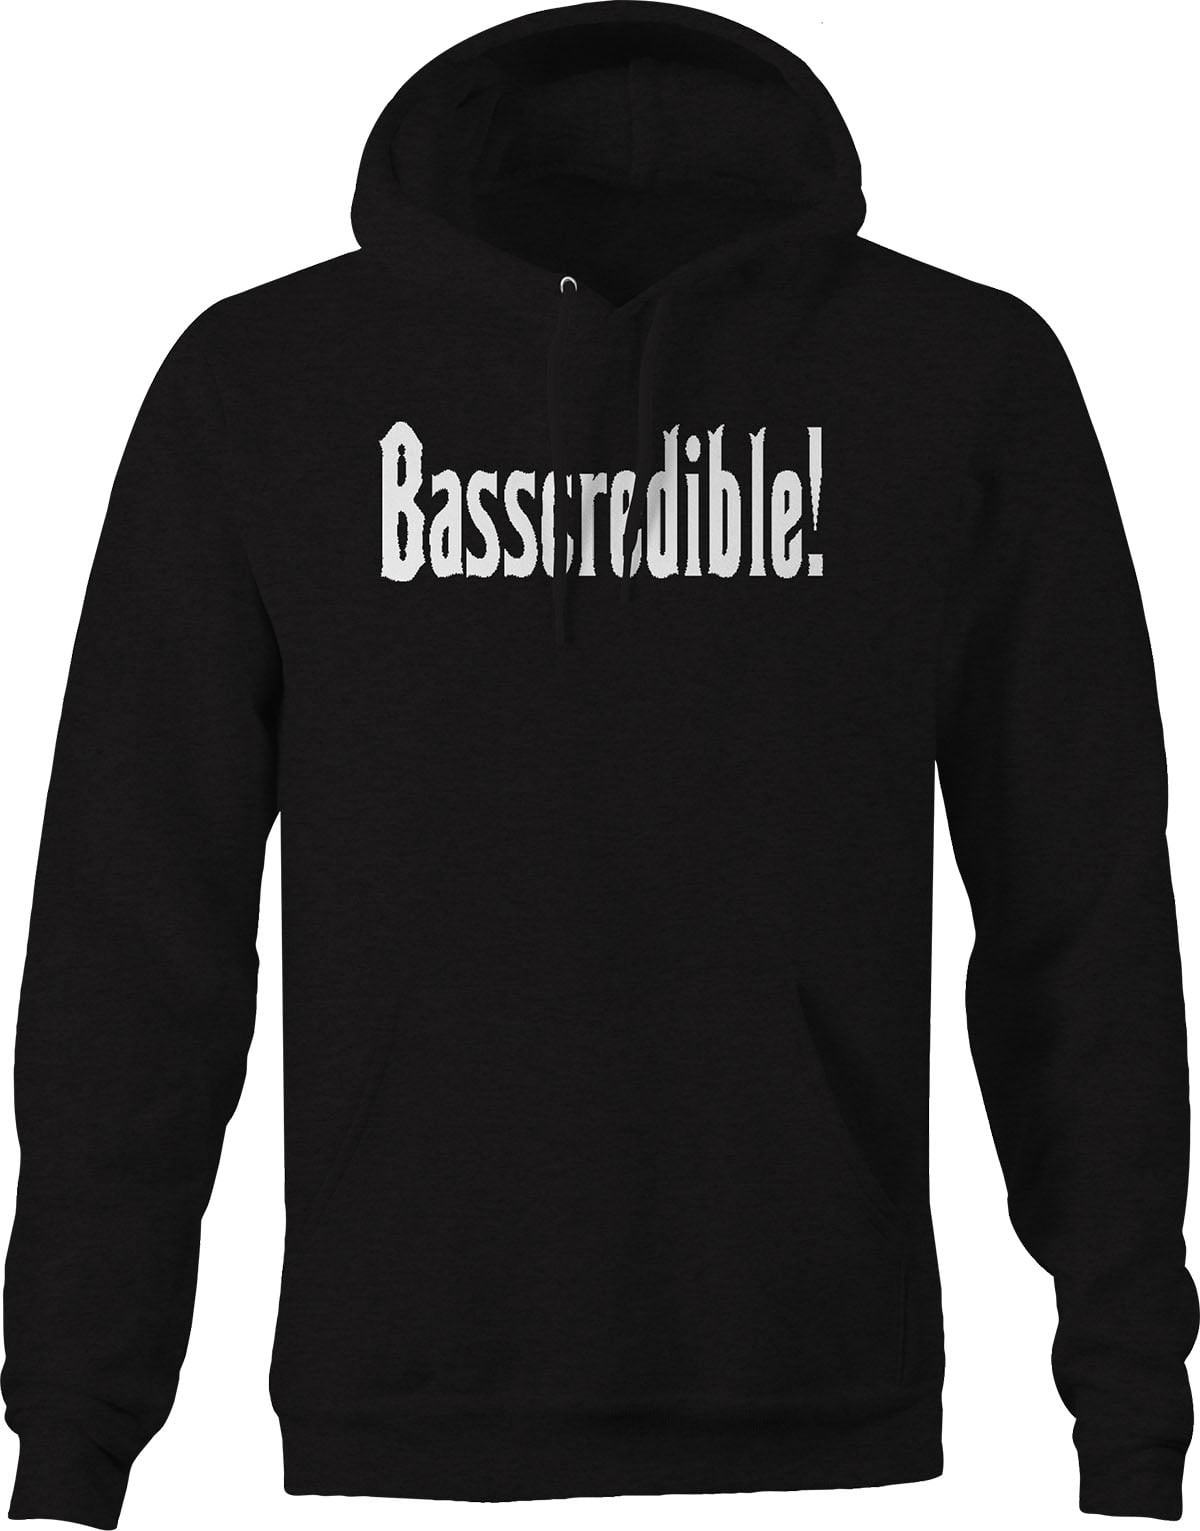 Basscredible - Bass Fishing Sweatshirt for Men Small Black